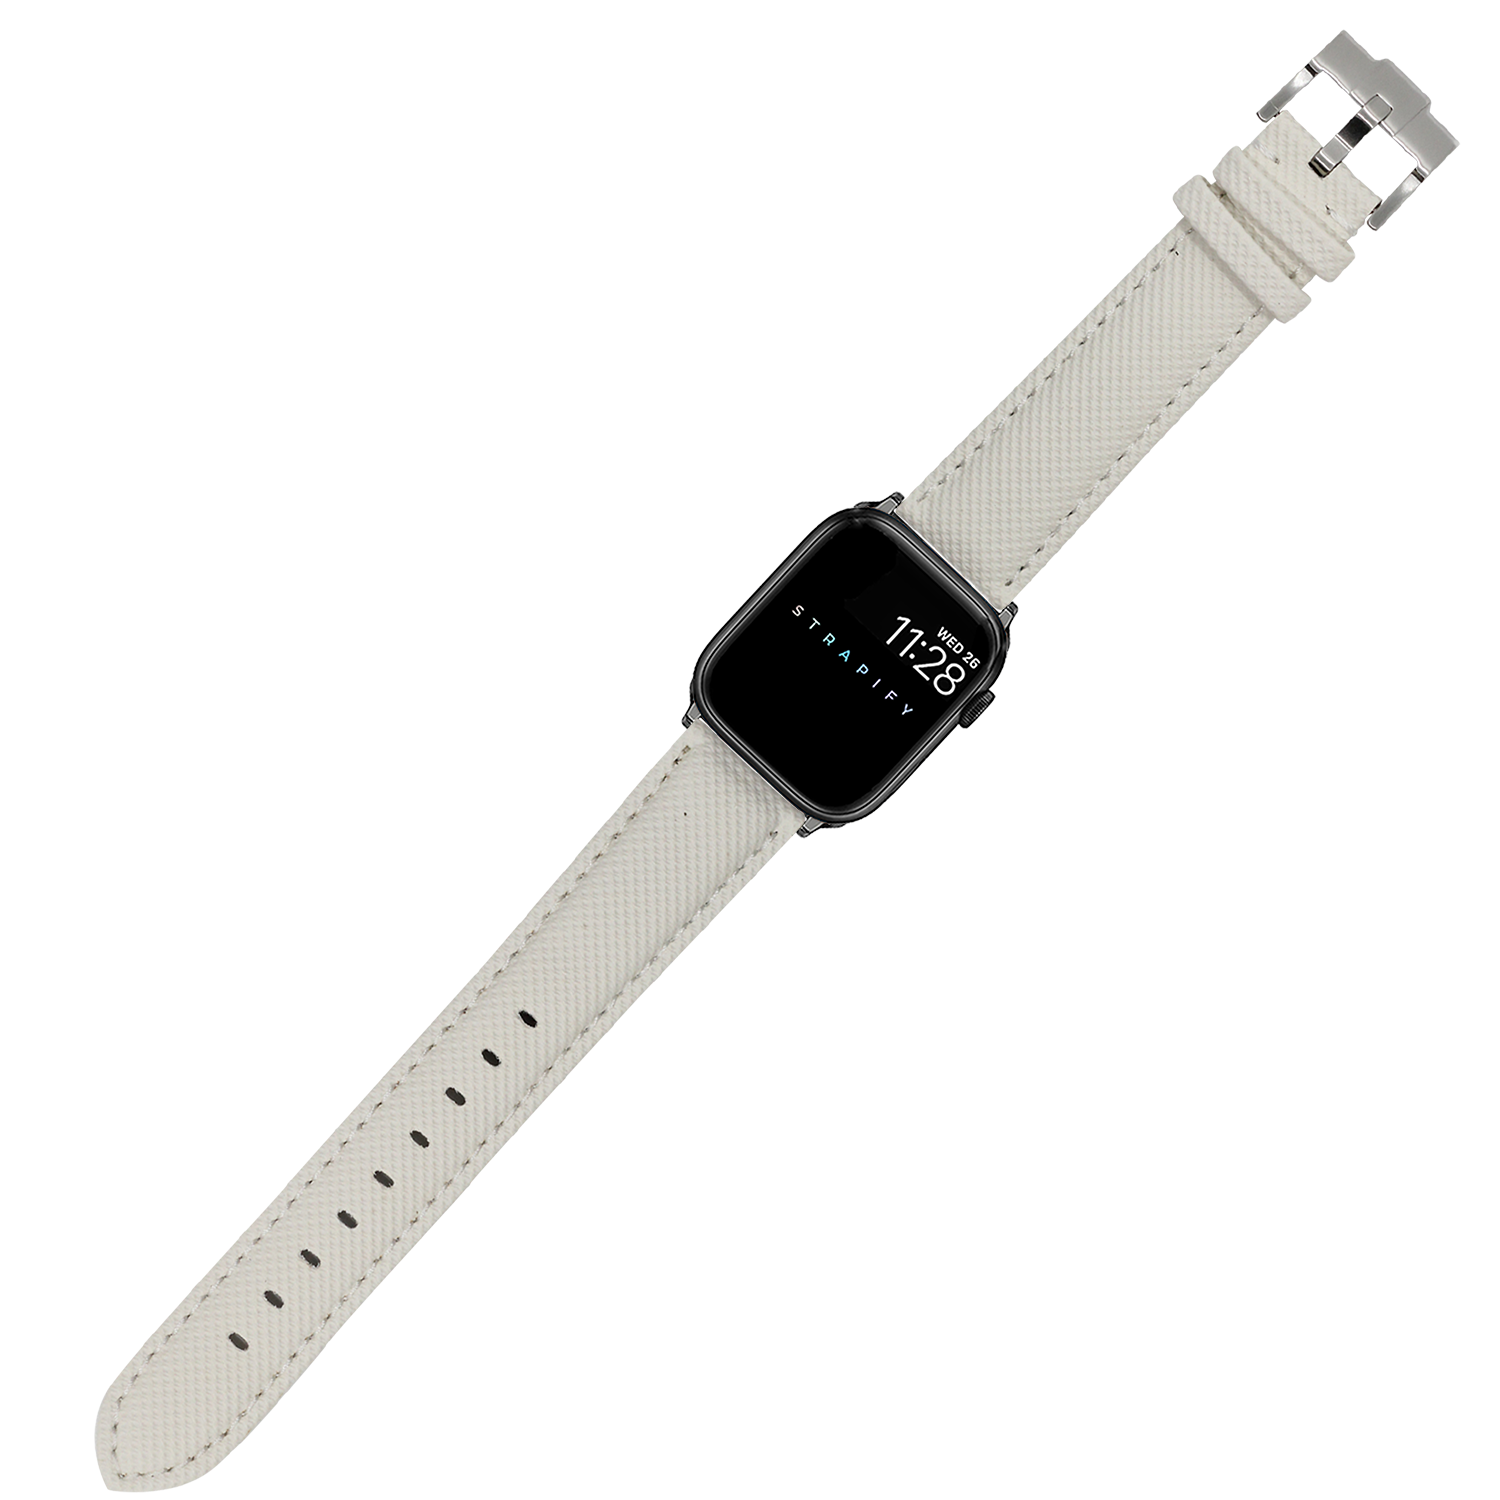 [Apple Watch] Sailcloth - White